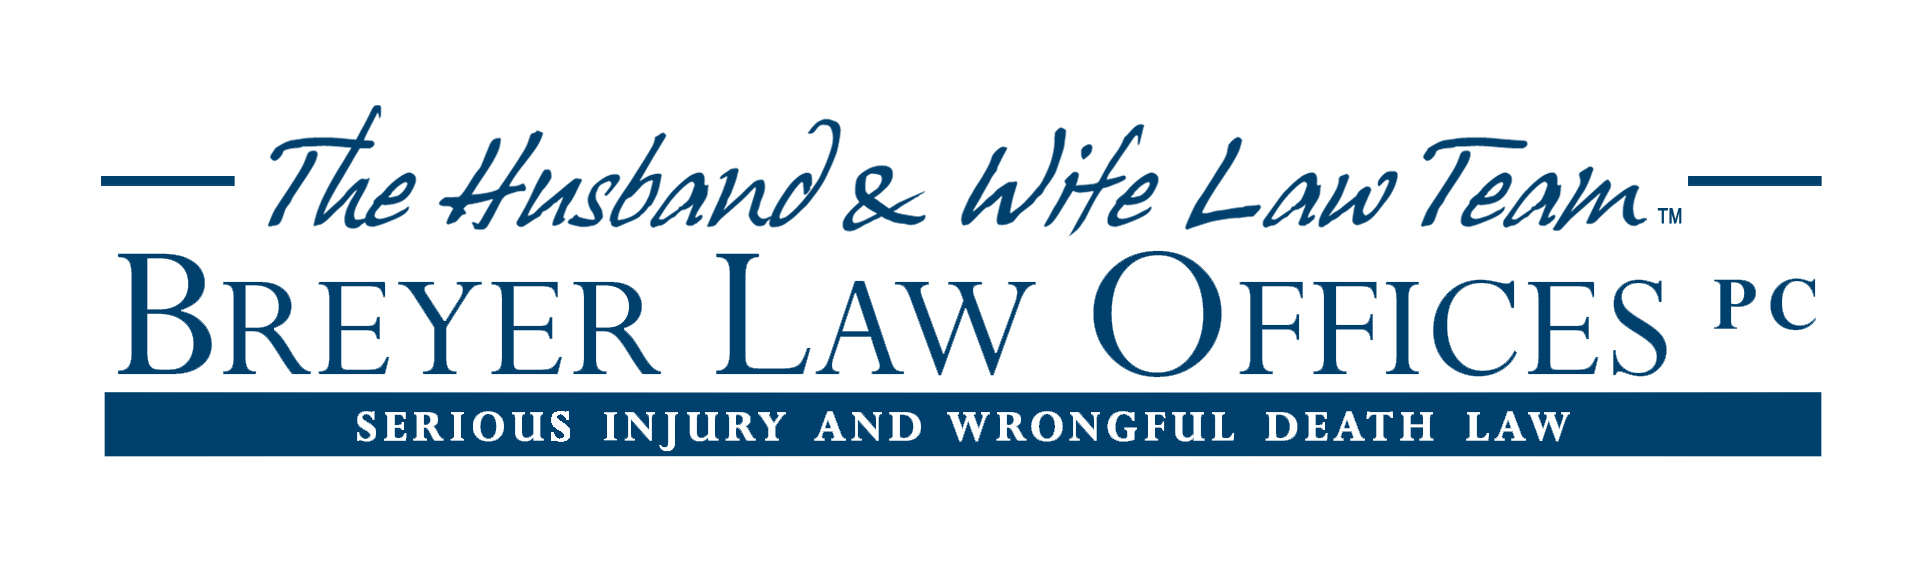 Breyer Law Offices PC Logo